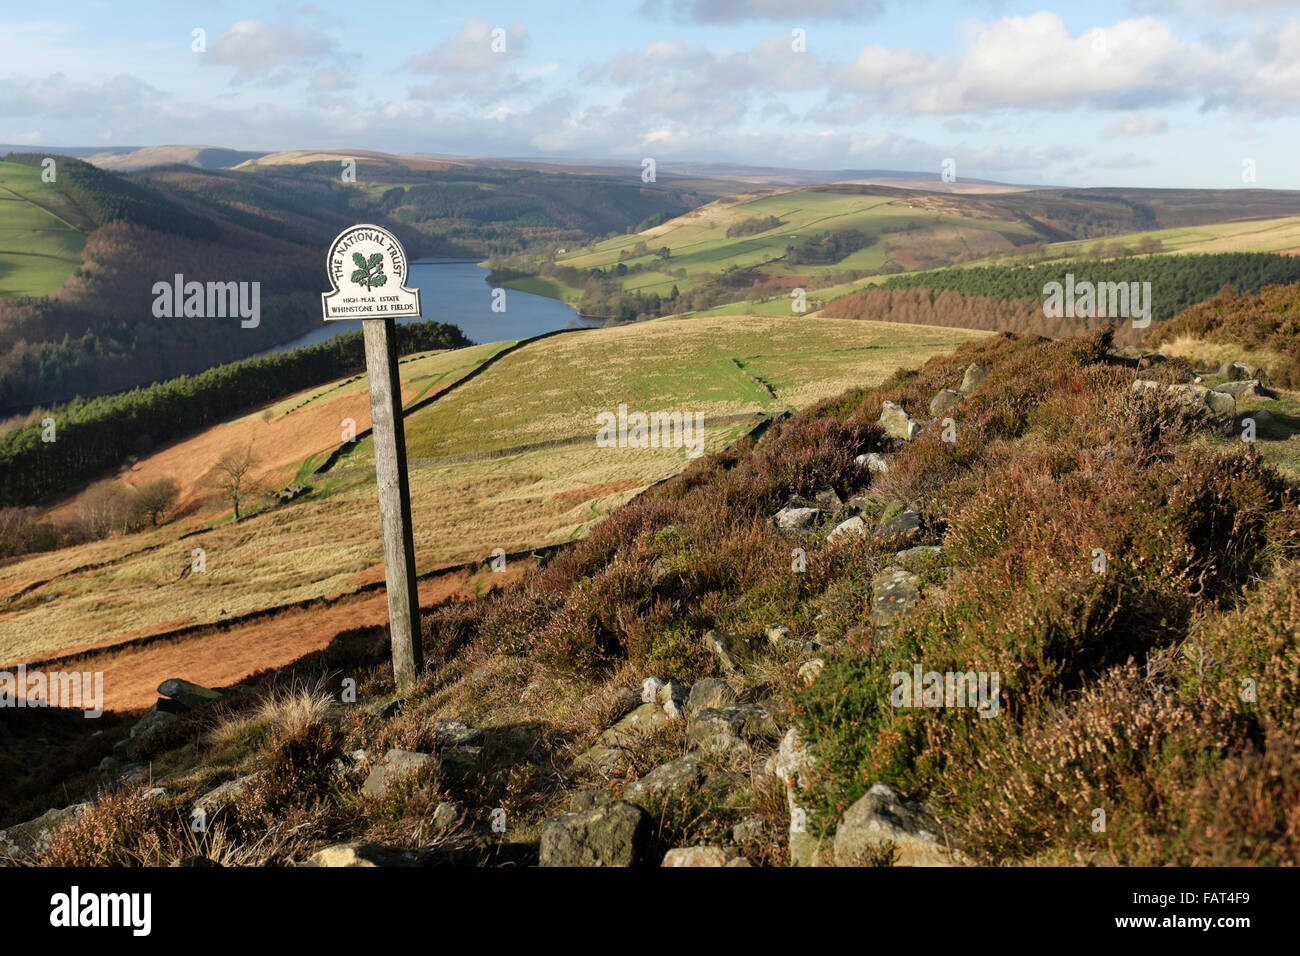 National Trust sign, High Peak Estate, Whinstone Lee Fields, Peak District National Park, Derbyshire, England, UK Stock Photo